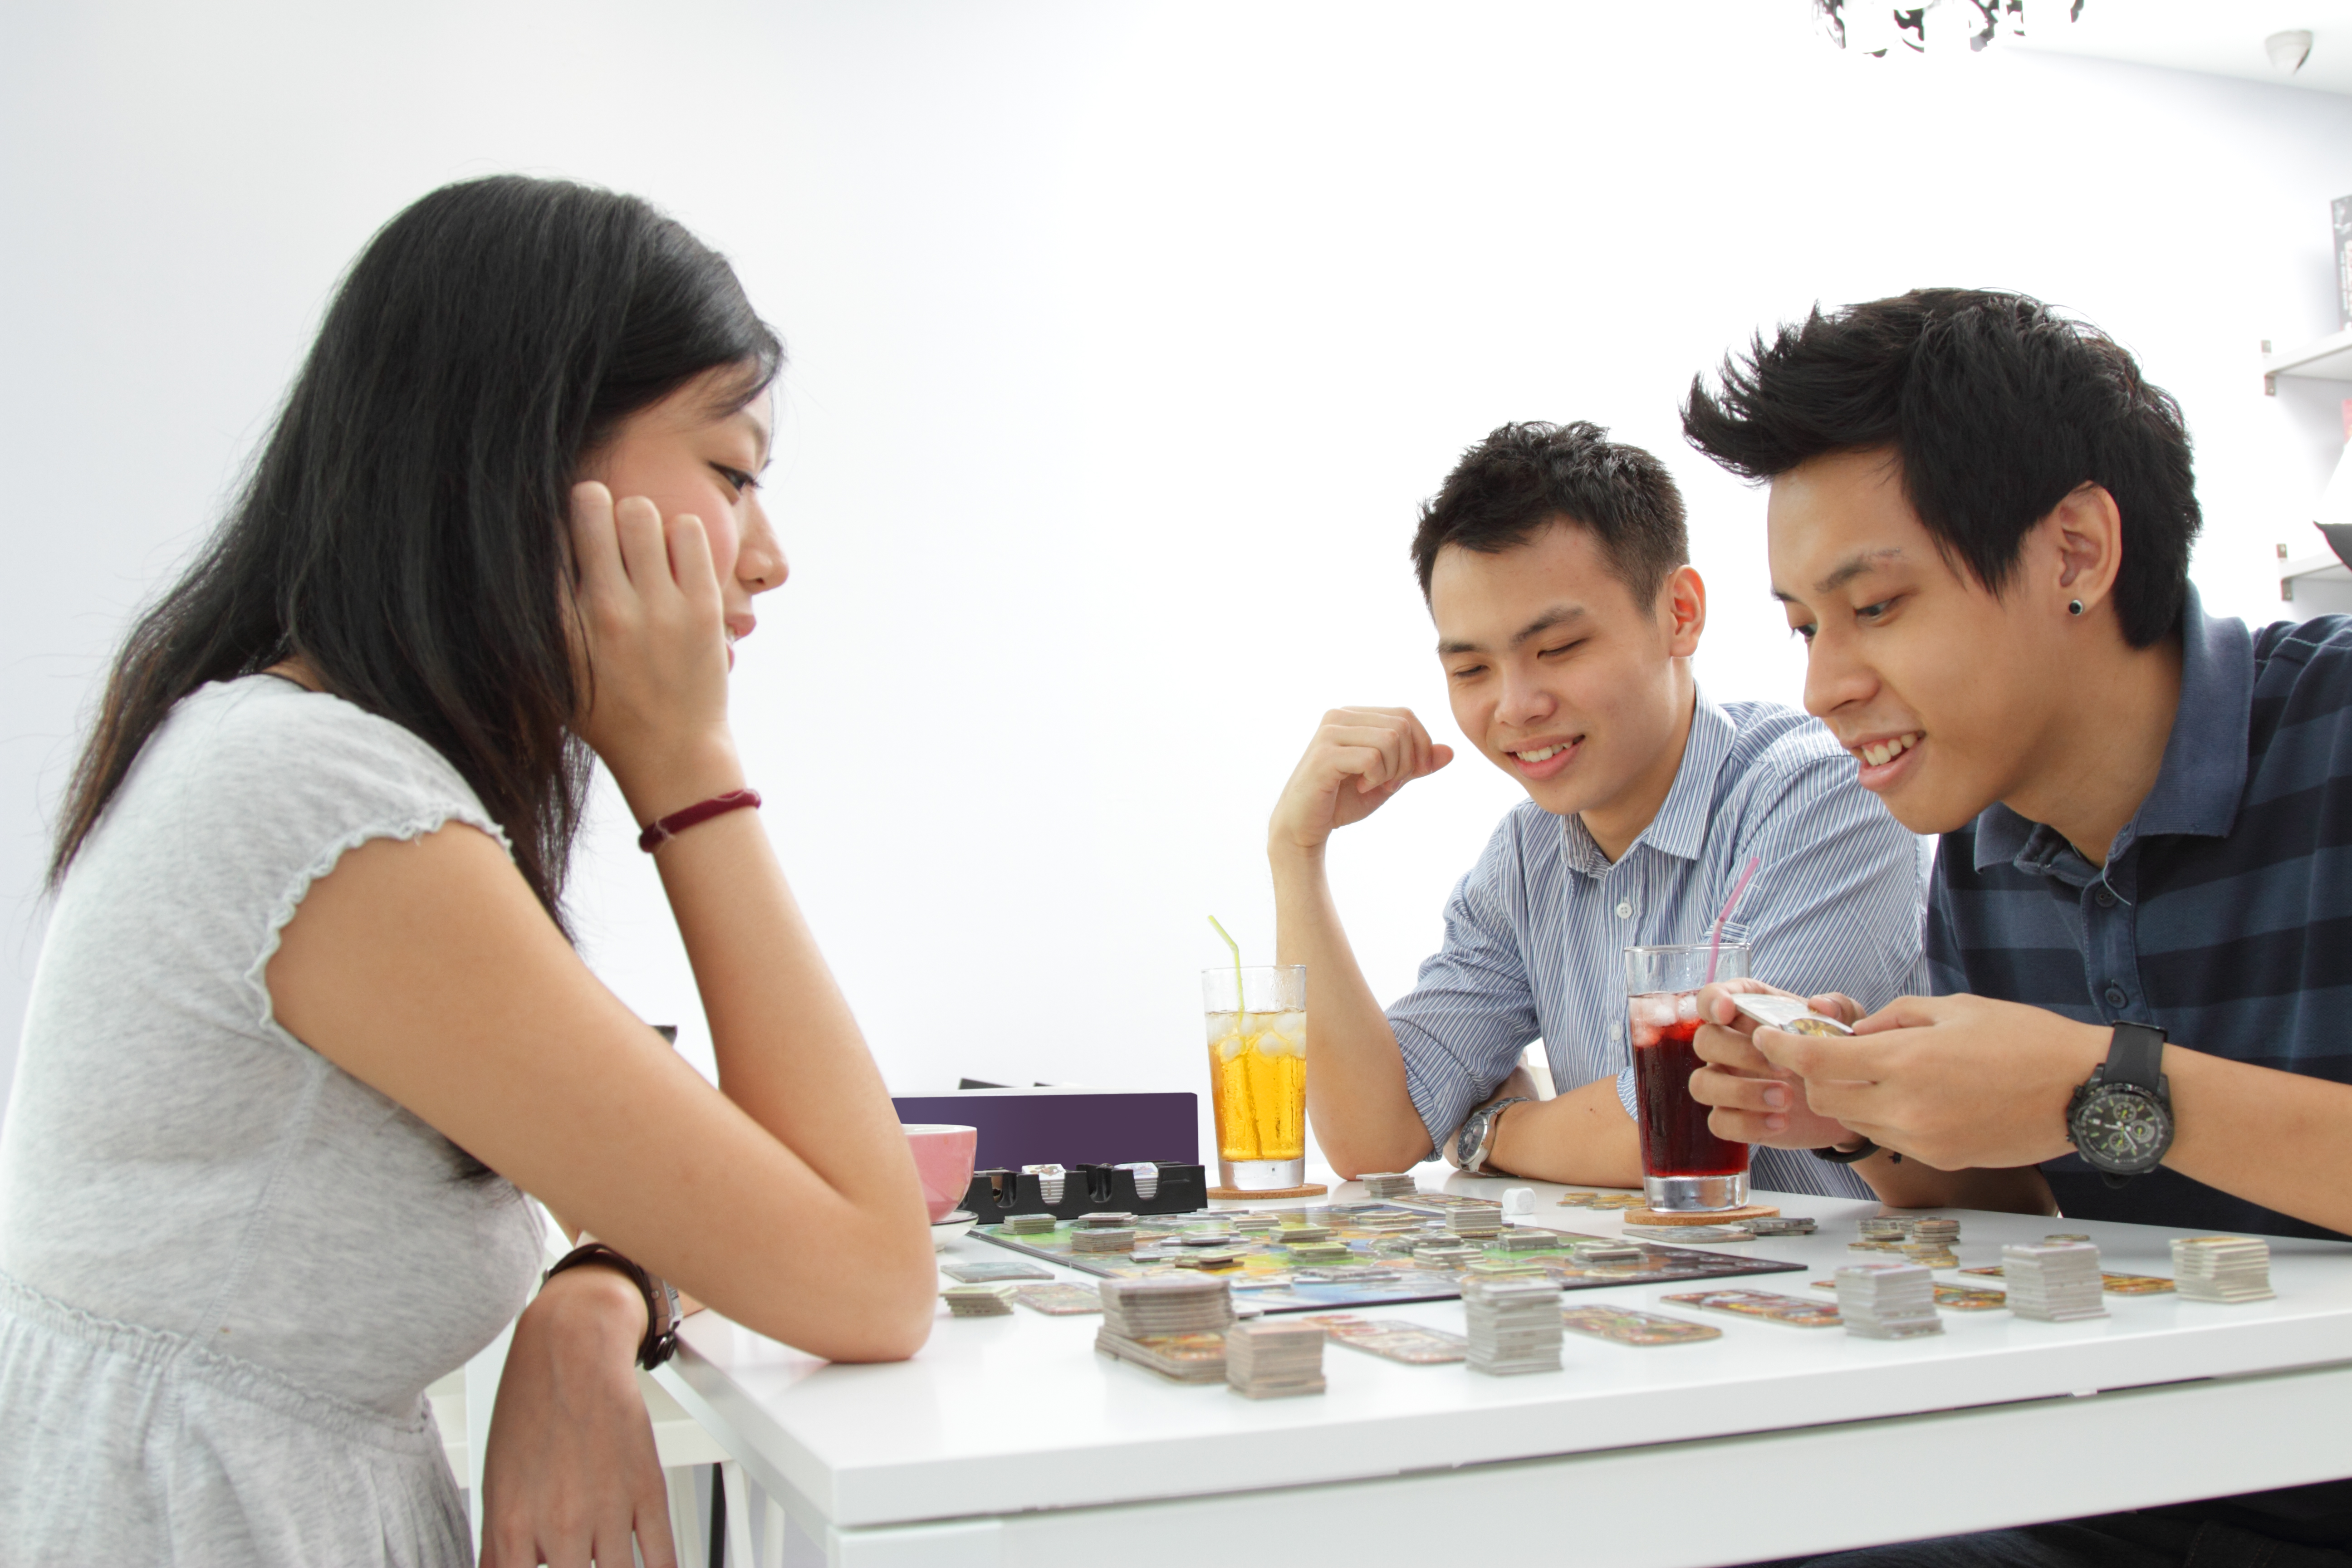 Three people playing a board game